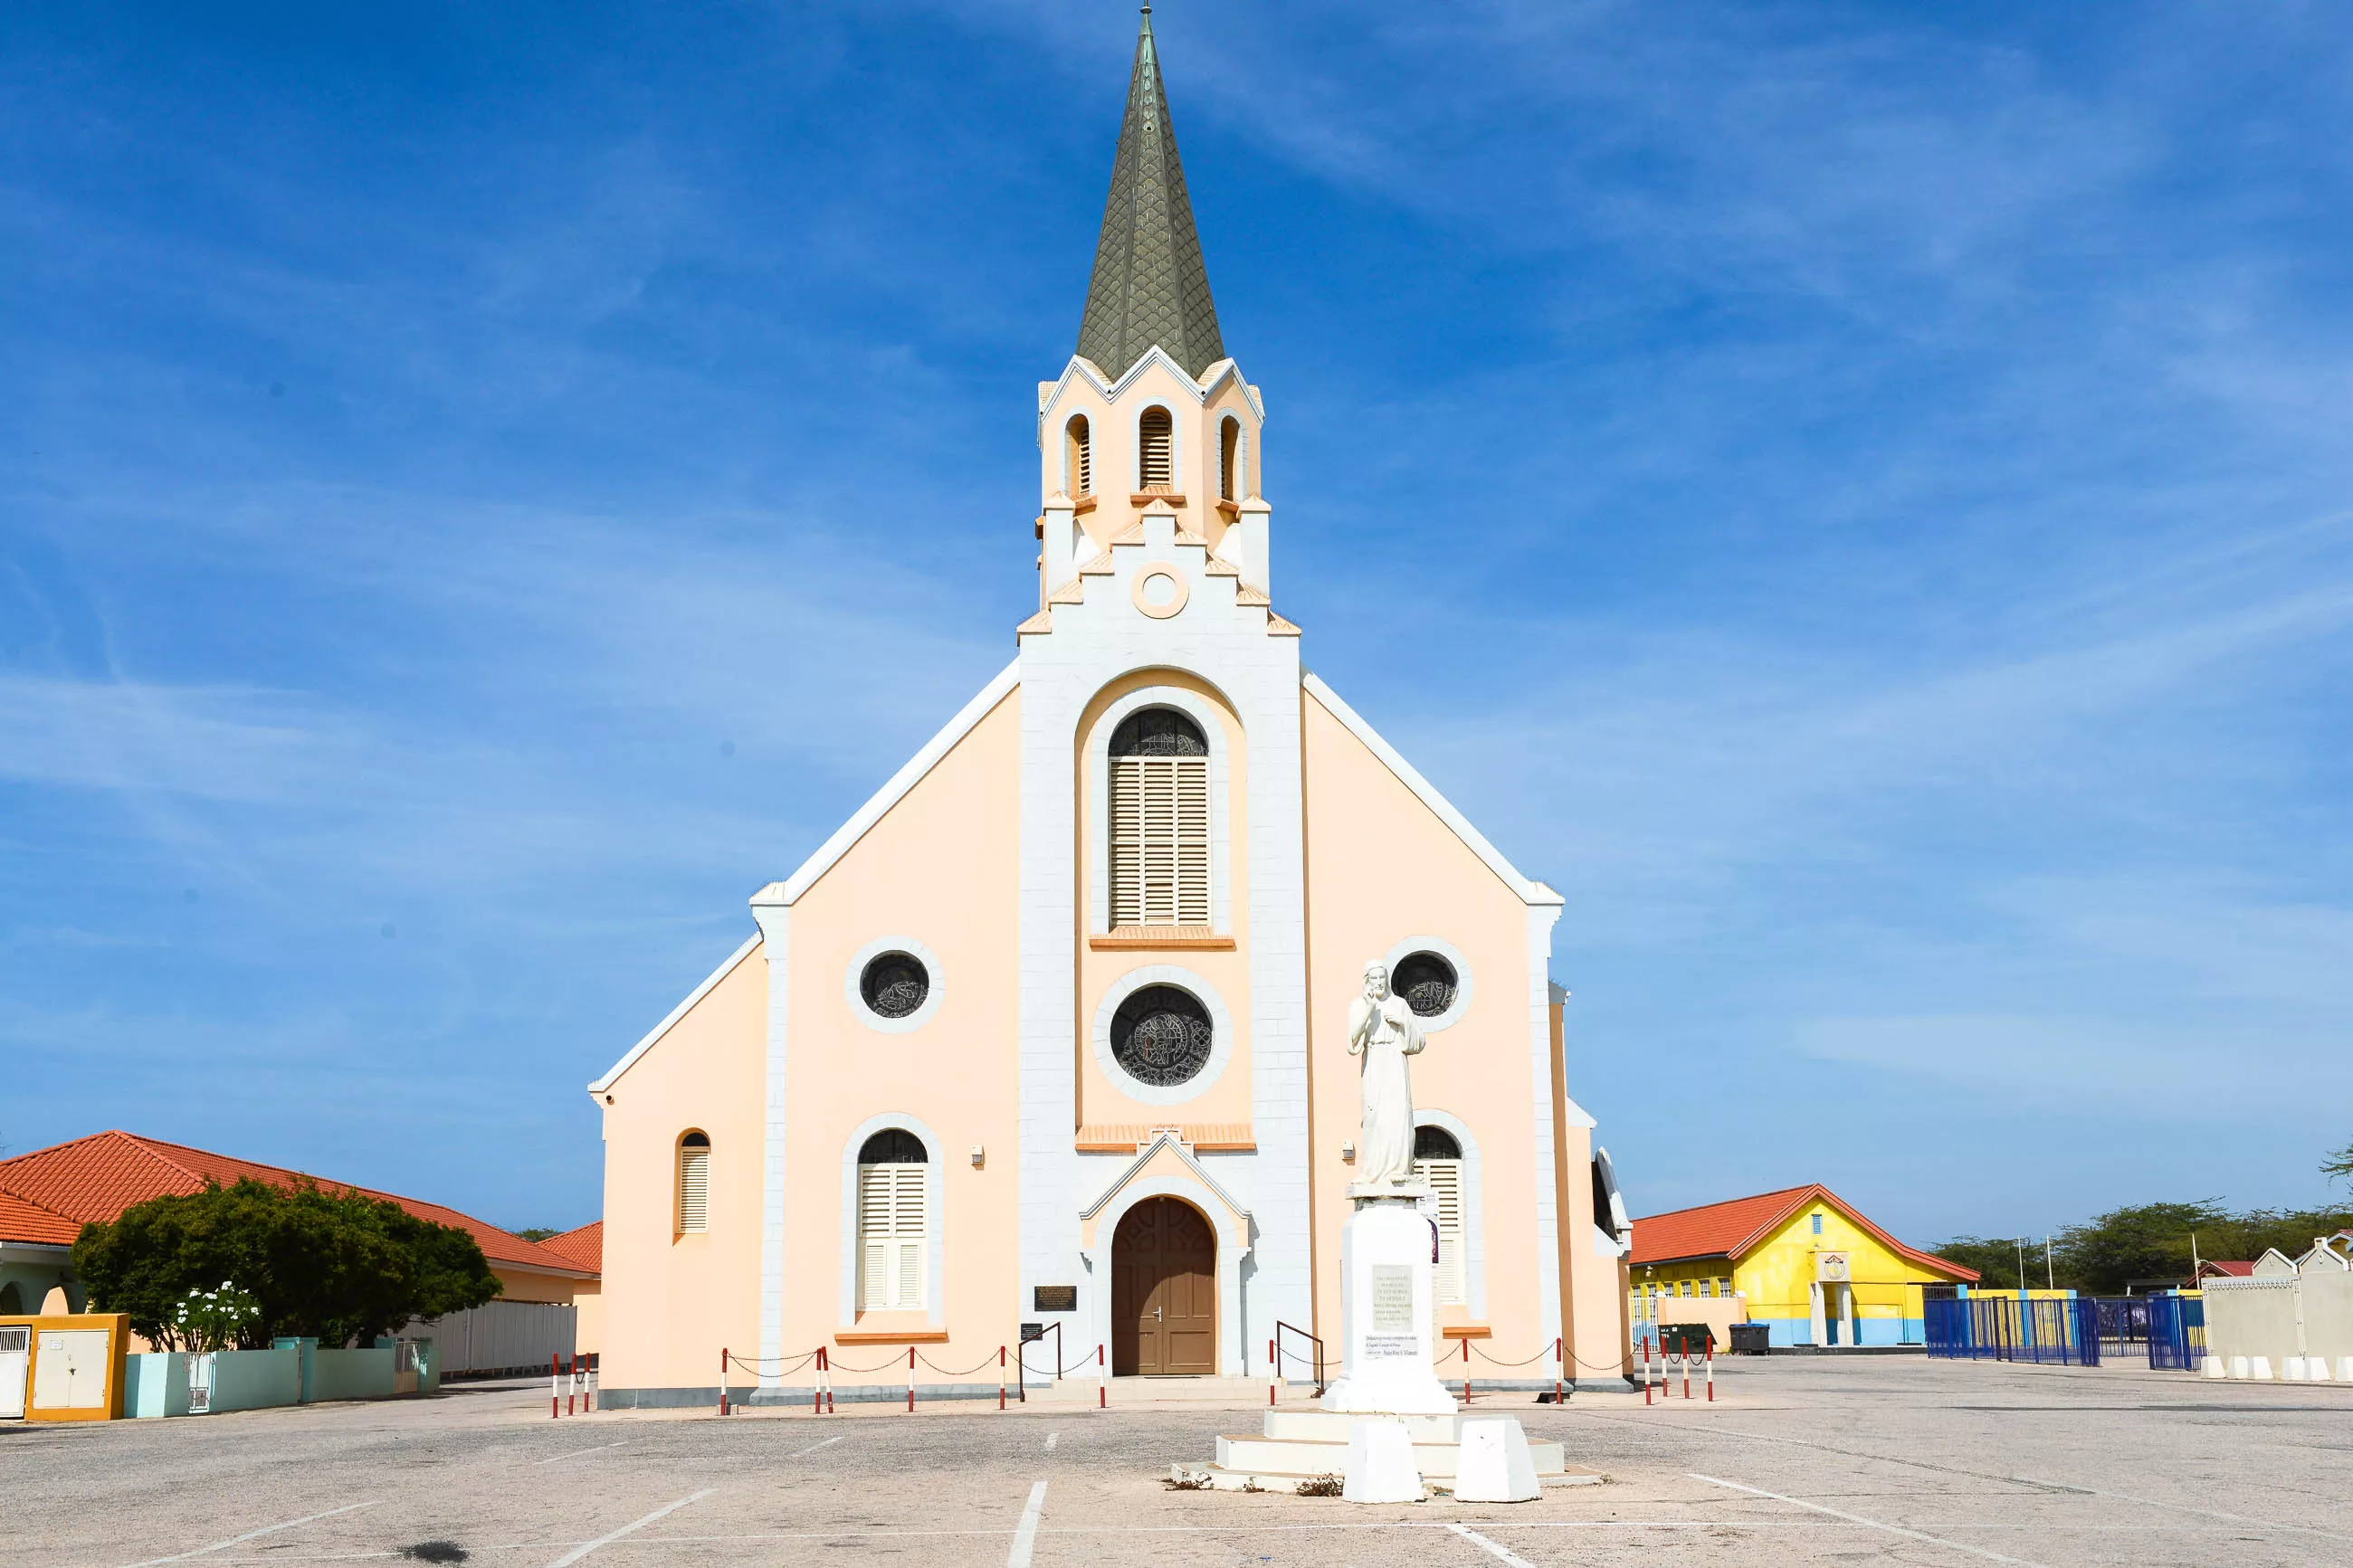 Saint Anna Parish Office in Aruba, Caribbean | Architecture - Rated 0.8